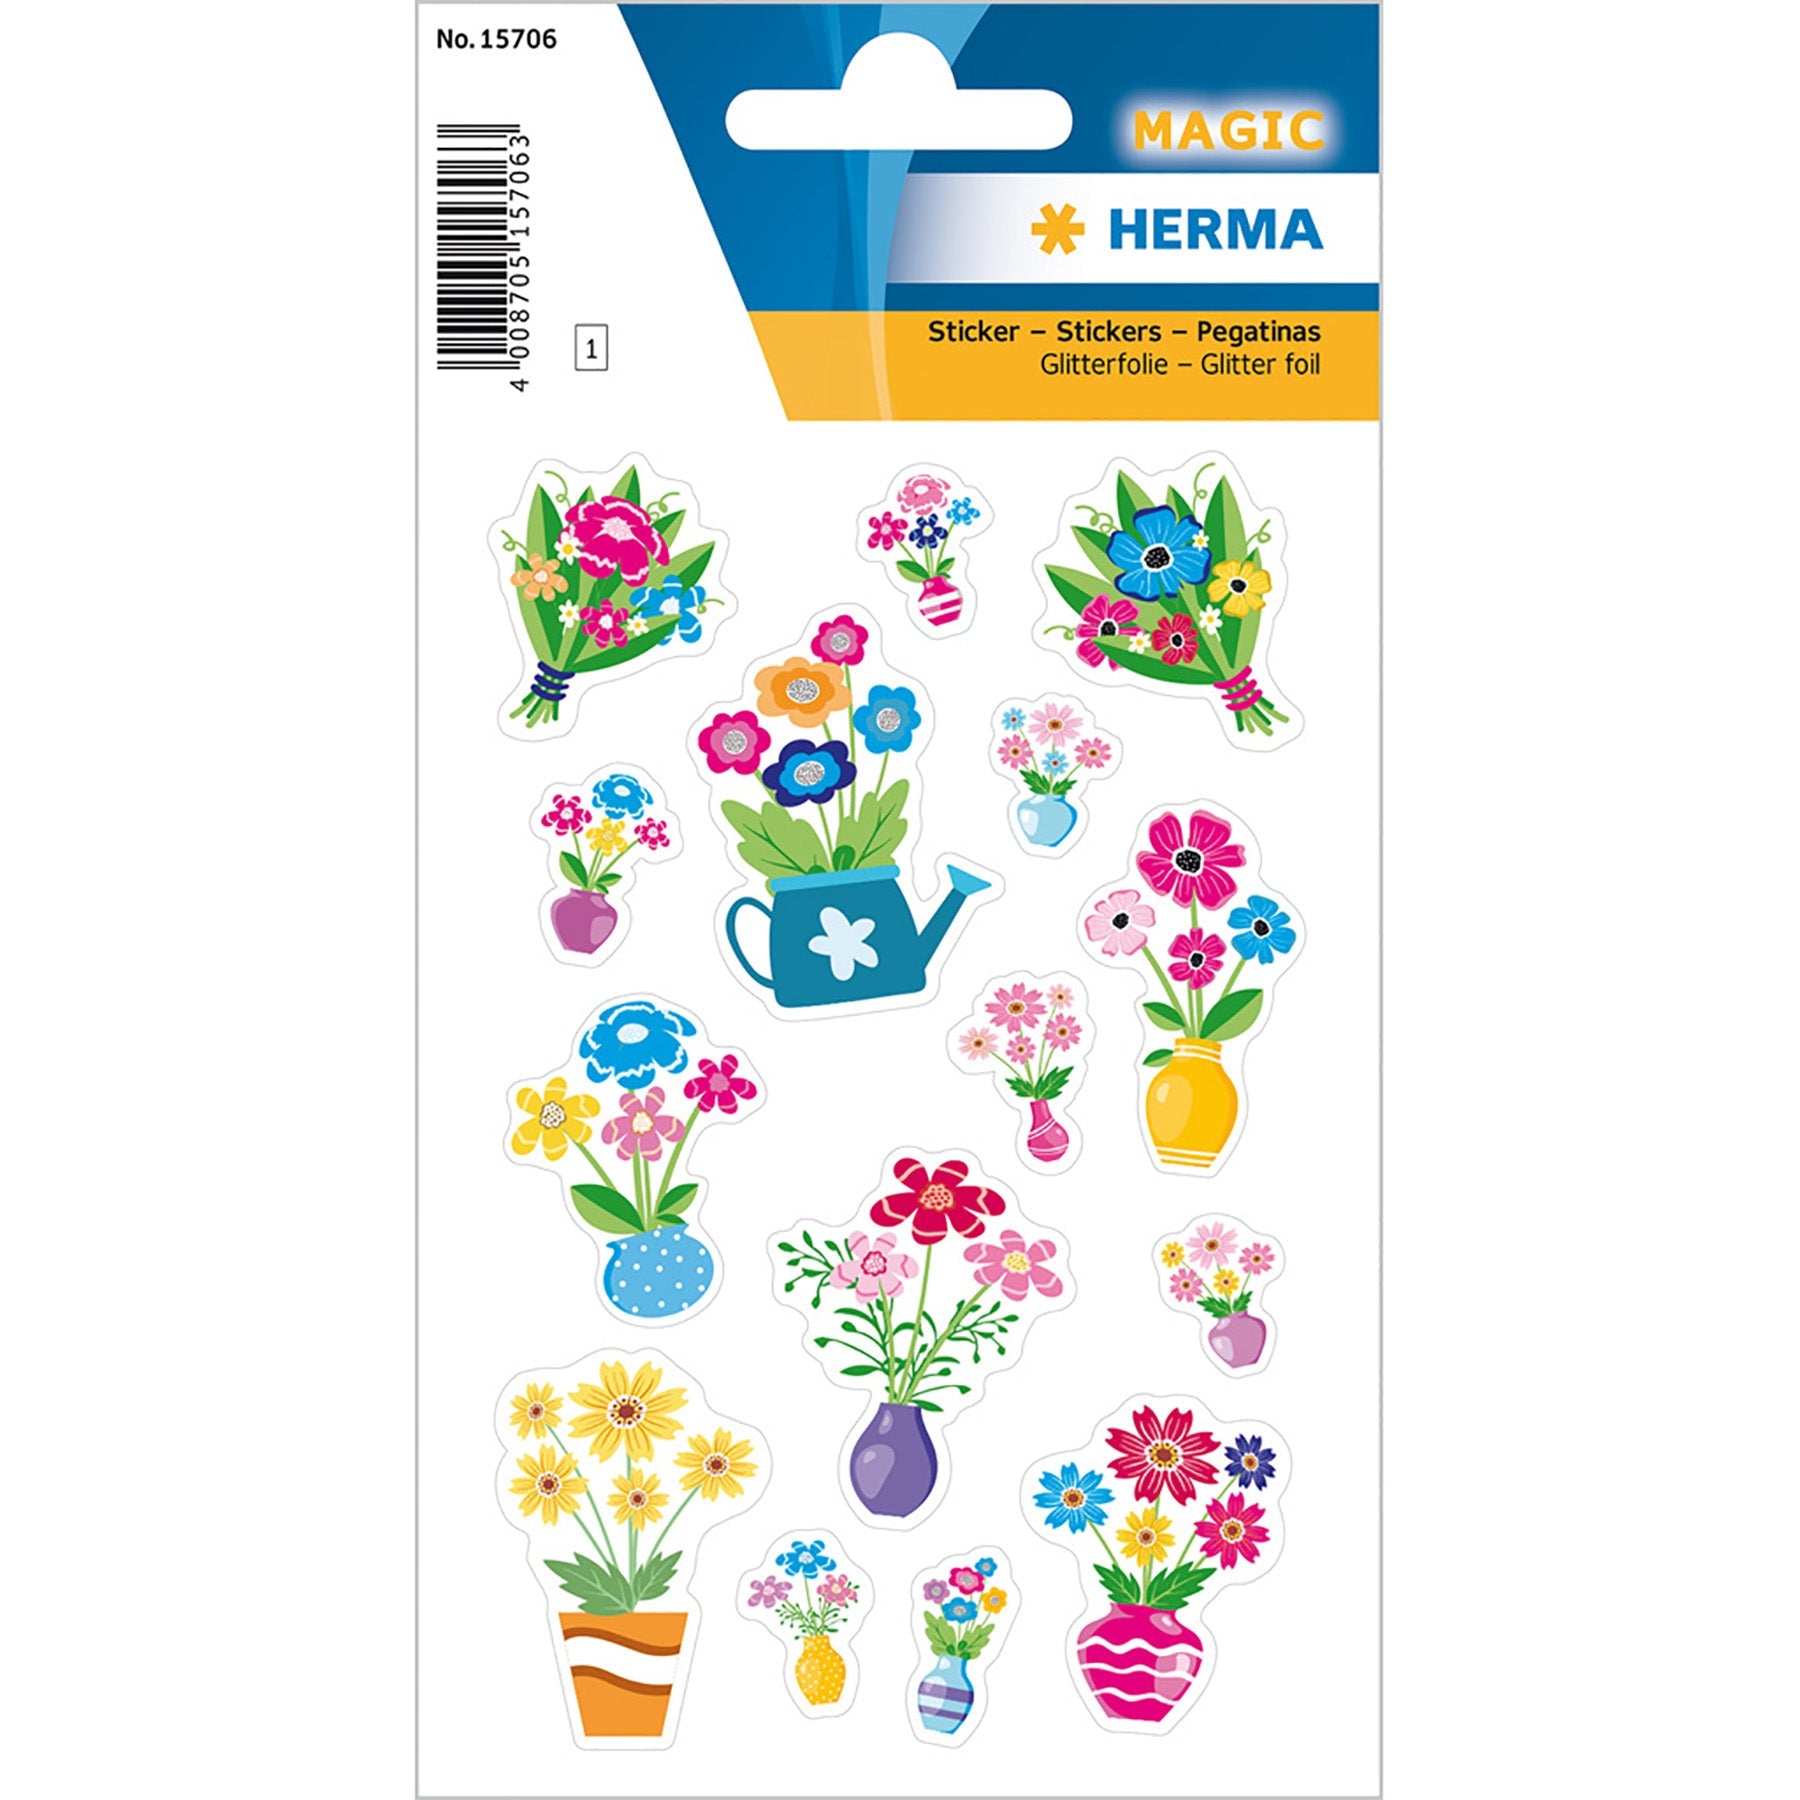 Herma Magic Stickers Flowers Glitter Foil 4.75x3.1in Sheet